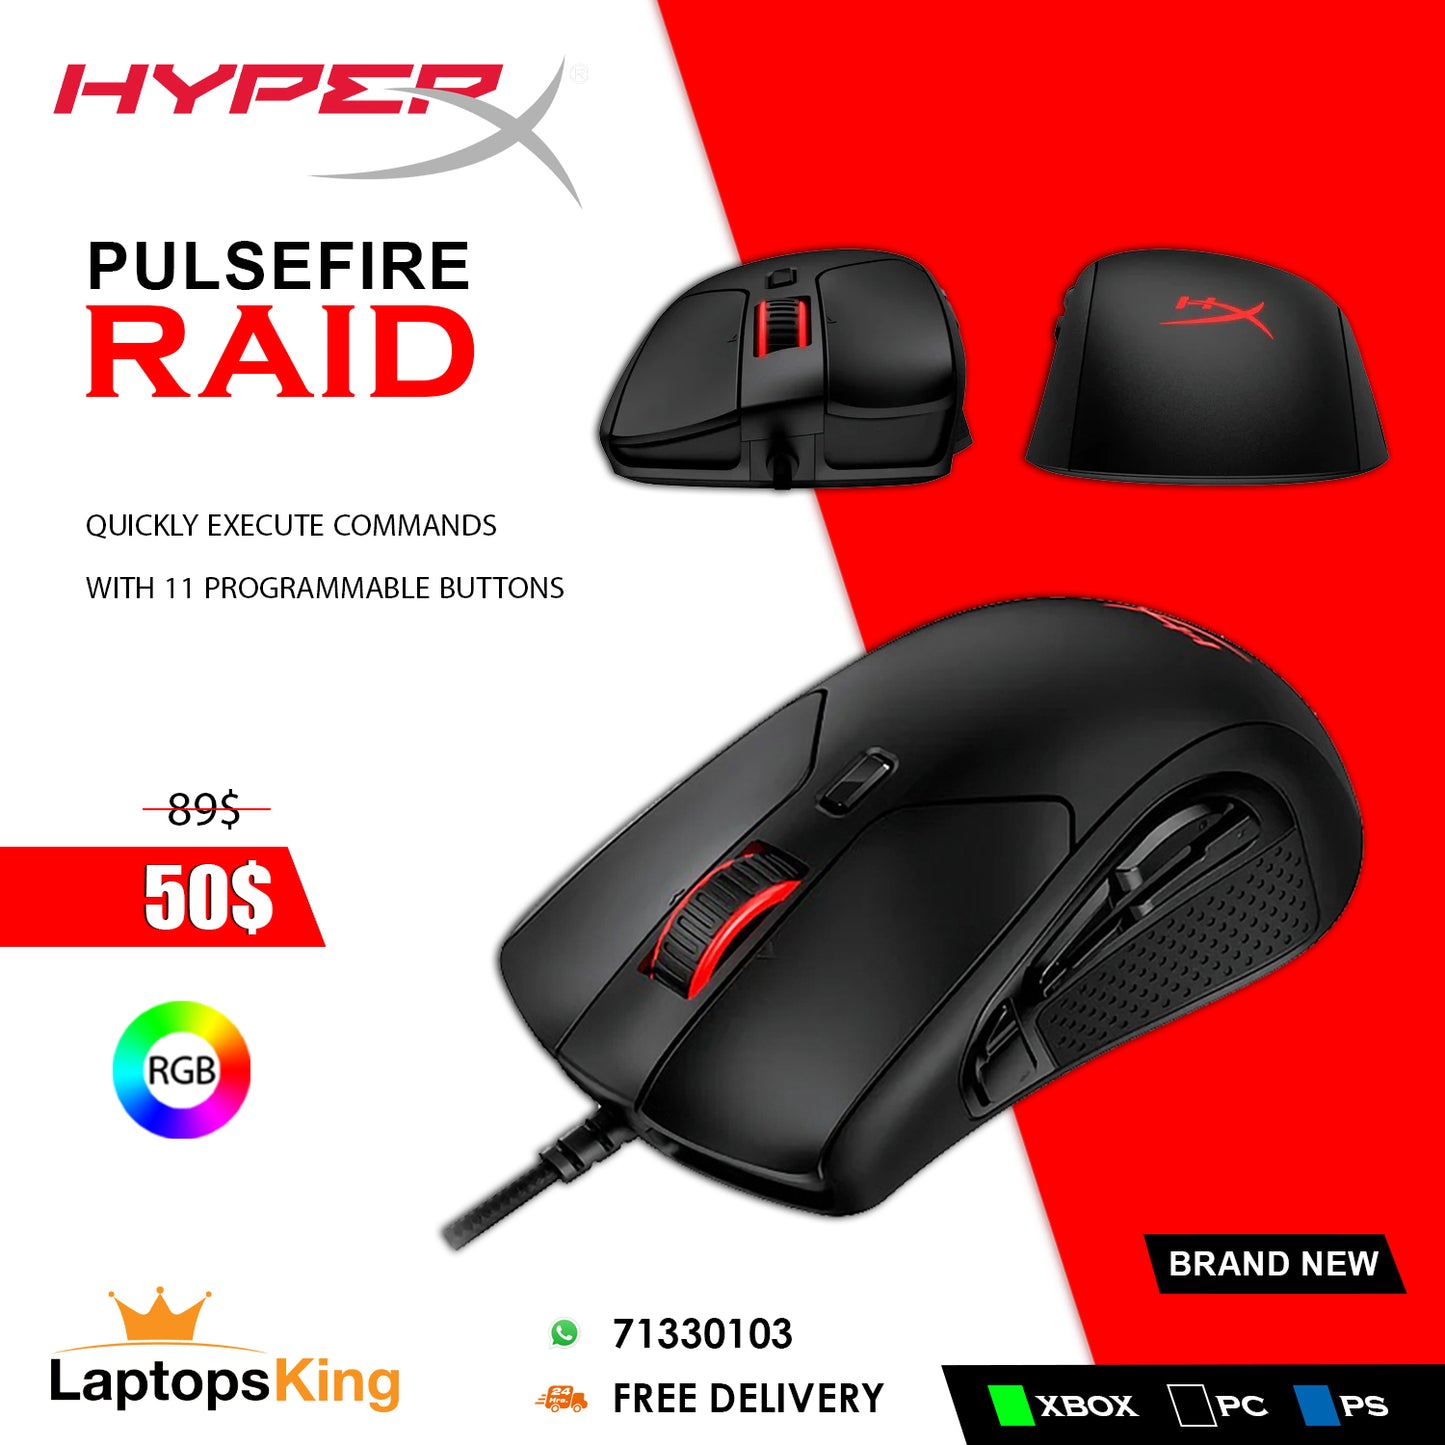 Hyperx Pulsefire Raid Rgb Gaming Mouse (Brand New)